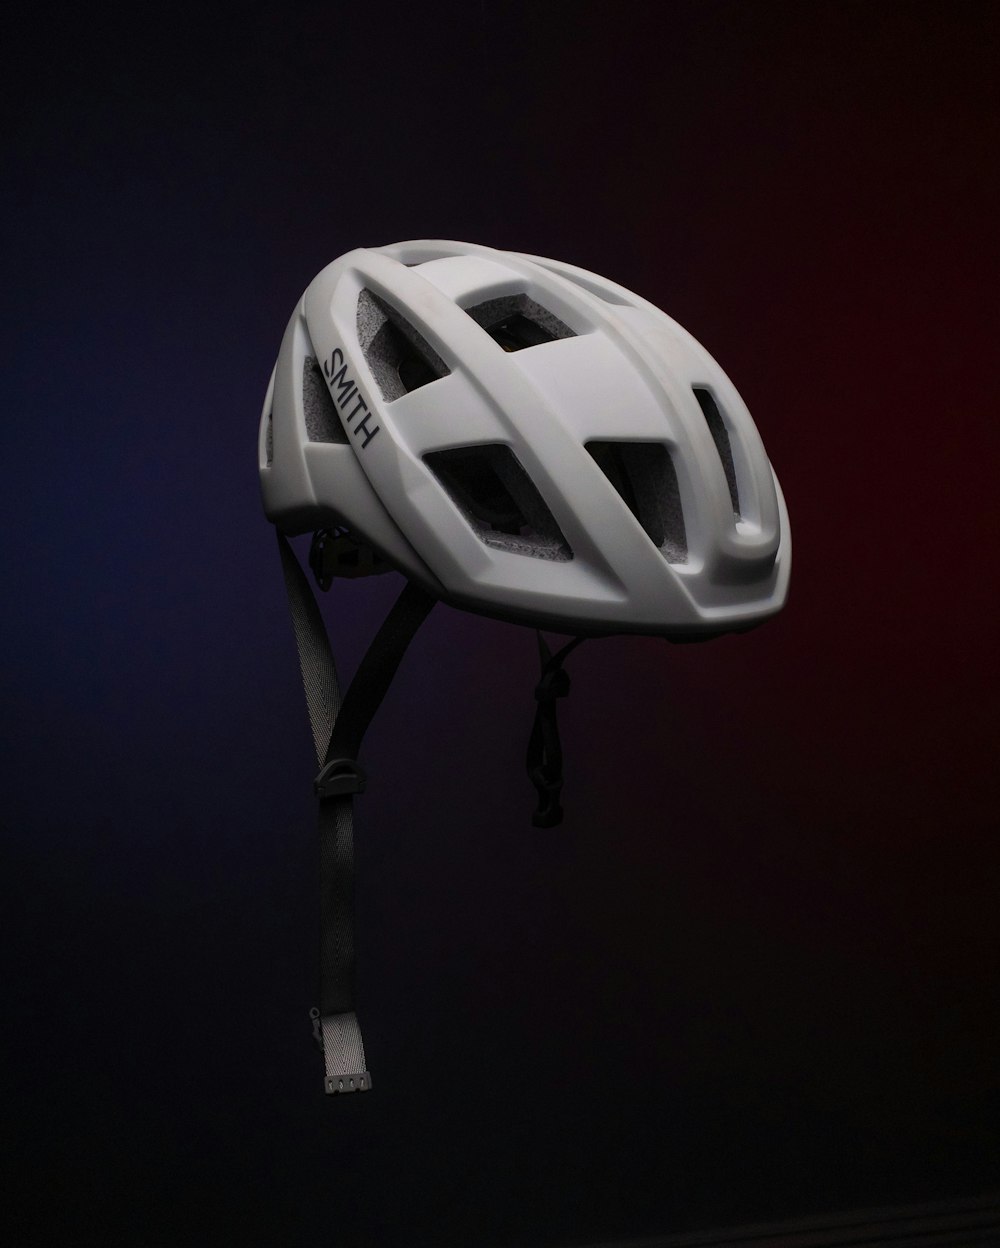 white and black bicycle helmet